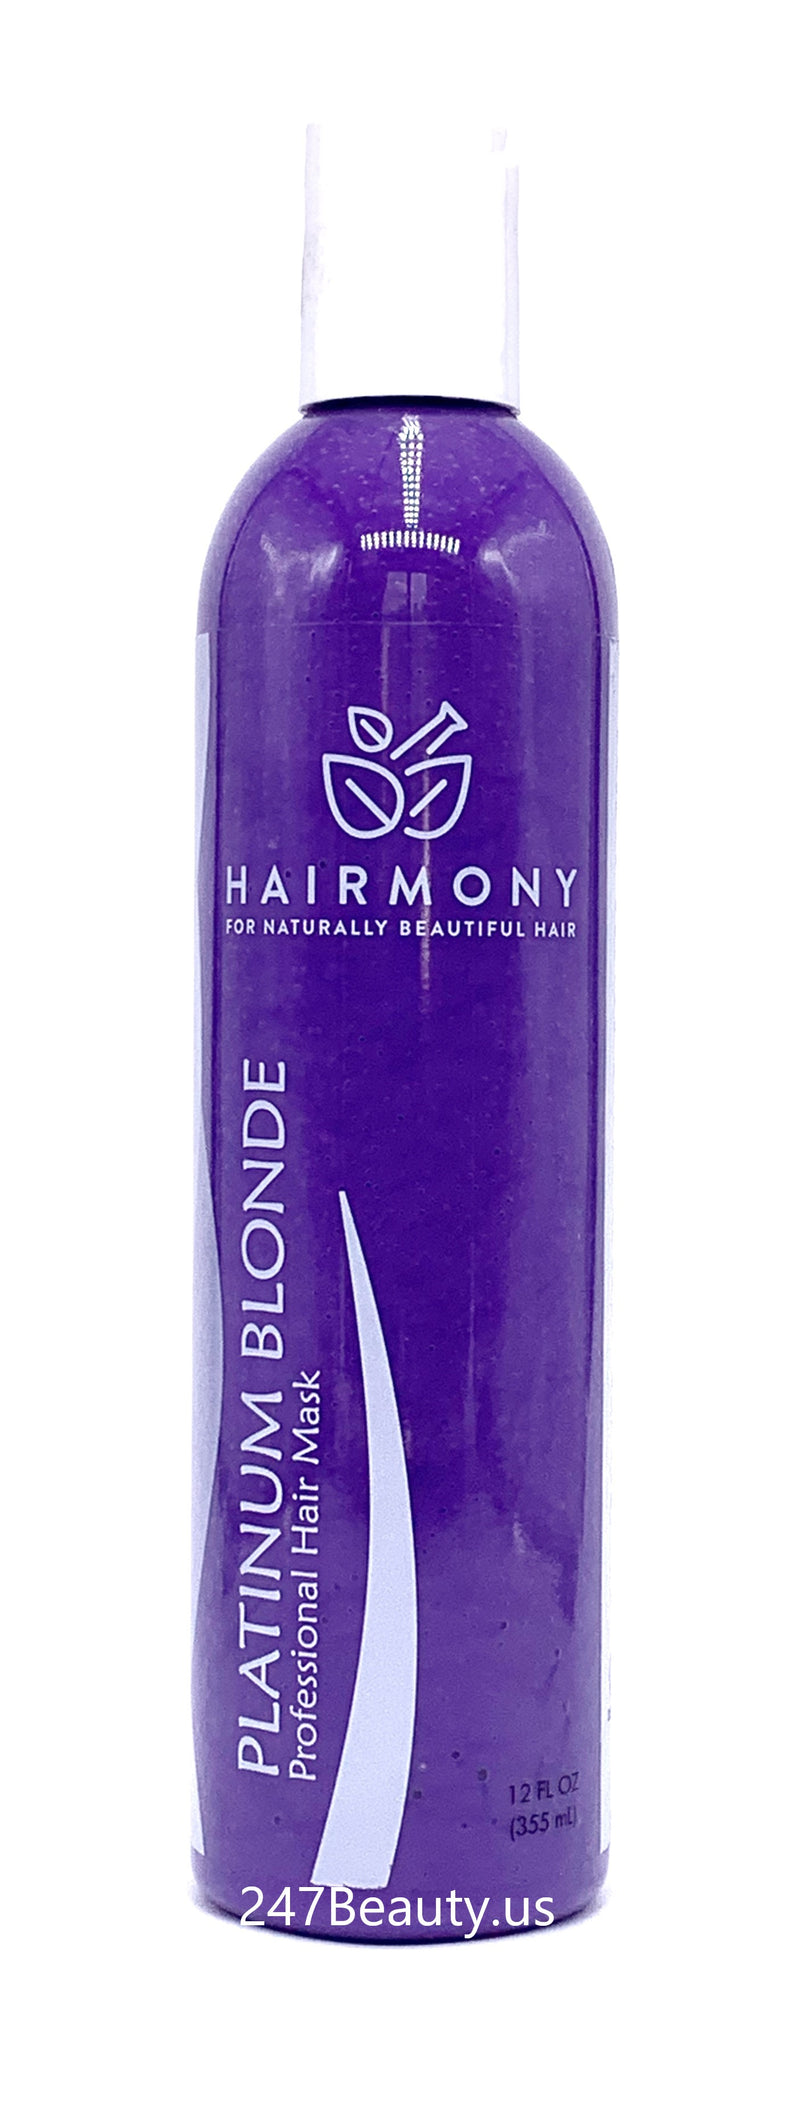 Hairmony Platinum Blonde Professional Hair Mask 12oz - Mascara para cabellos grises or Rubios